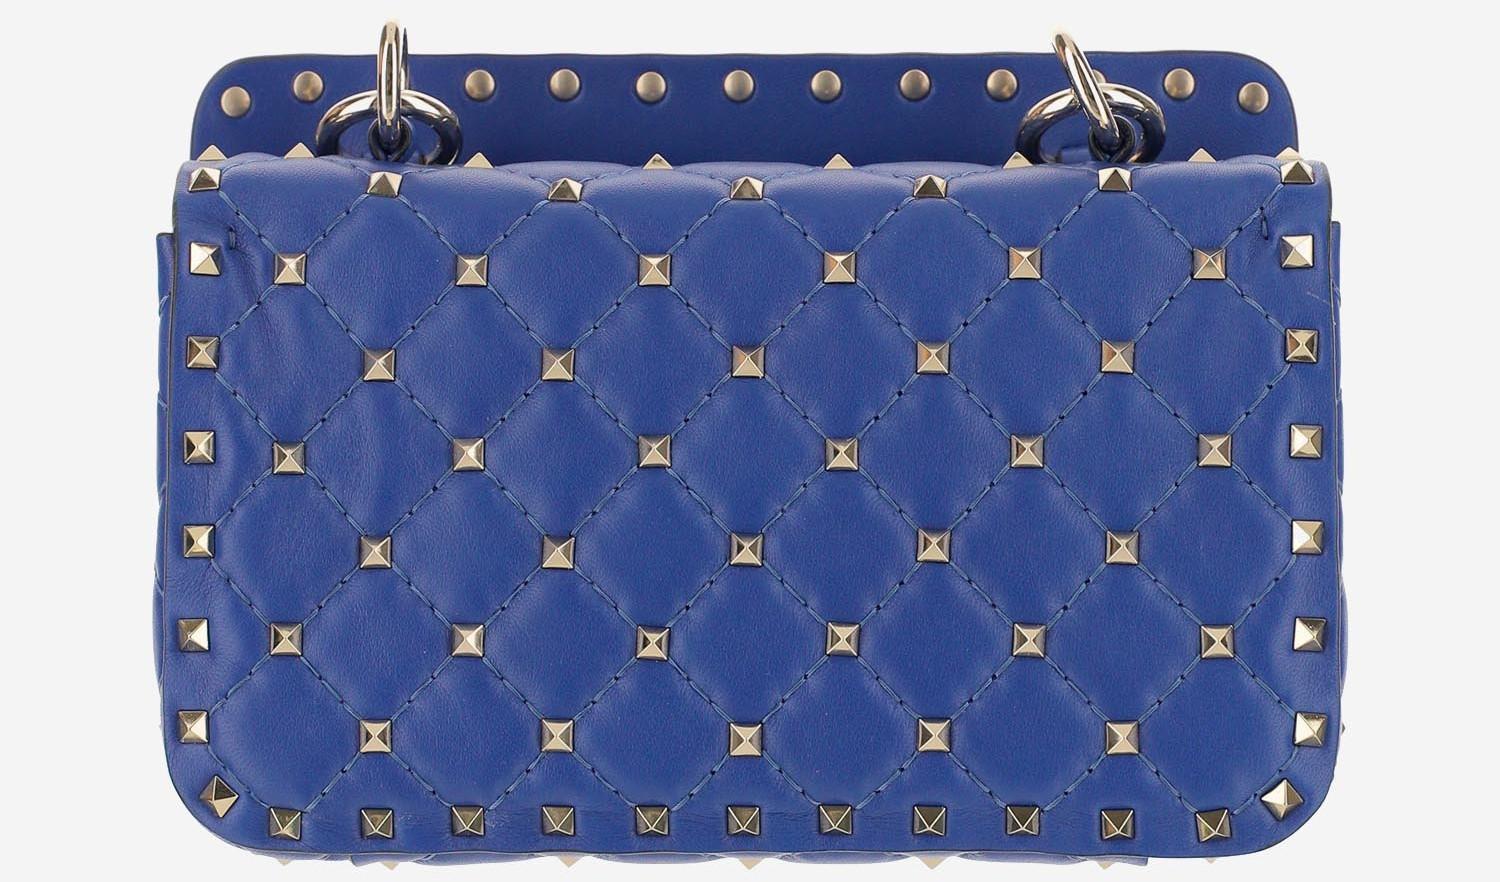 Rockstud Spike Small Shoulder Bag in Blue - Valentino Garavani